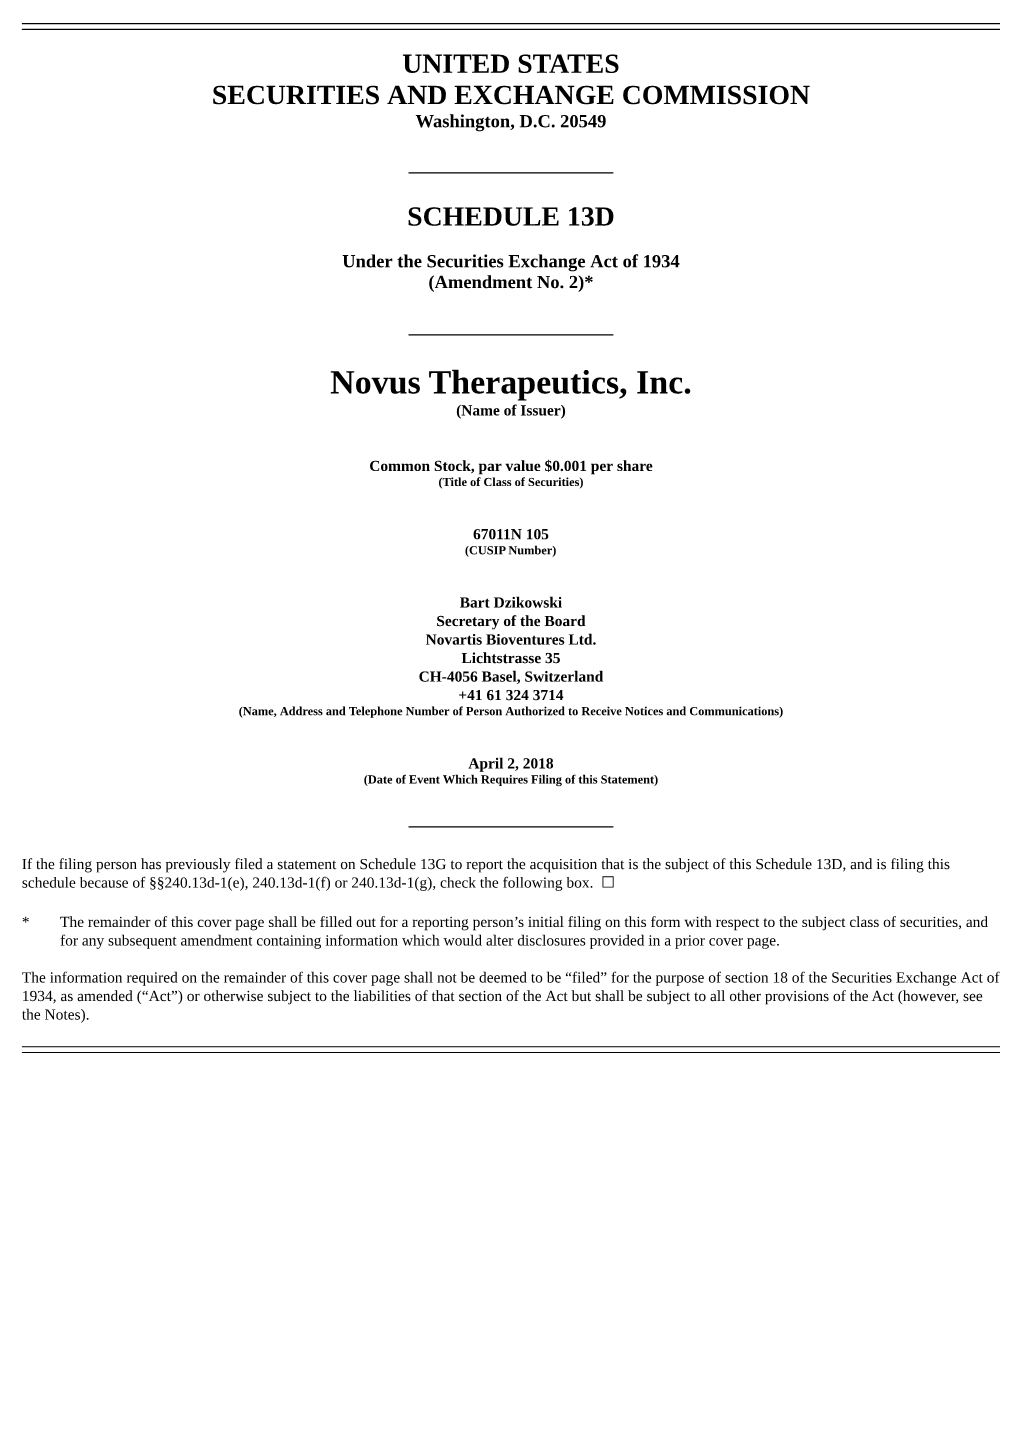 Novus Therapeutics, Inc. (Name of Issuer)